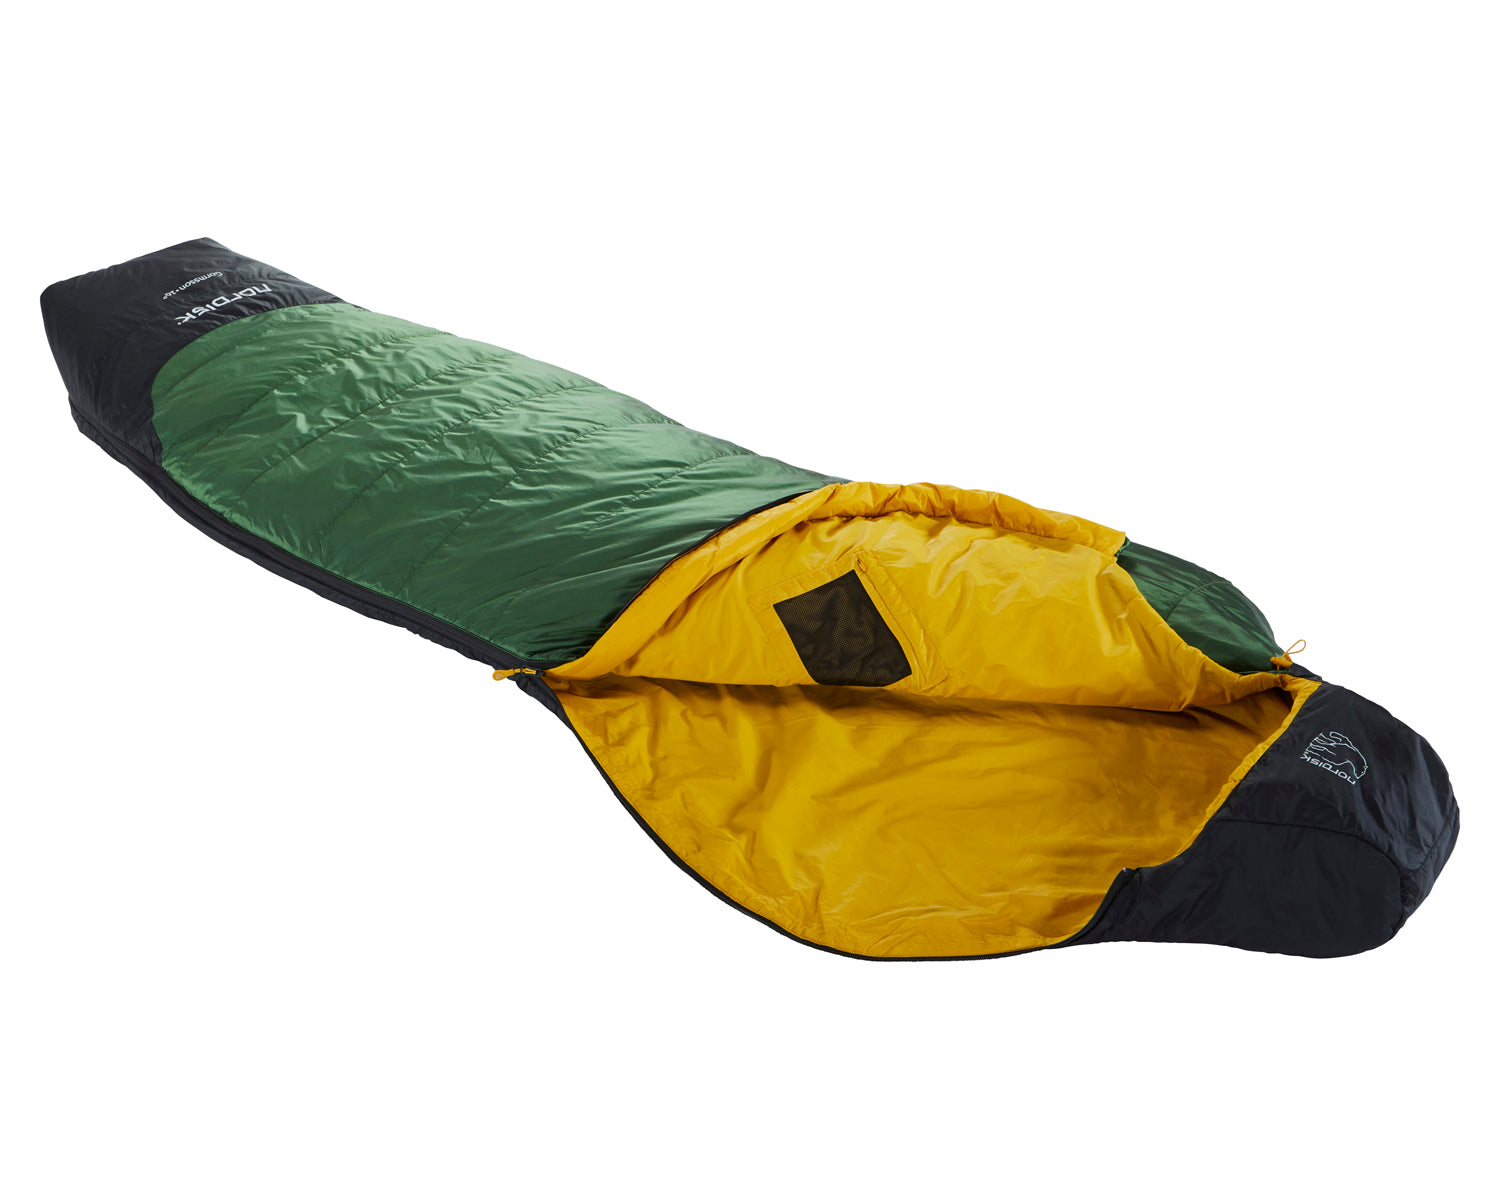 Gormsson +10° Curve sleeping bag - Artichoke Green/Mustard Yellow/Black